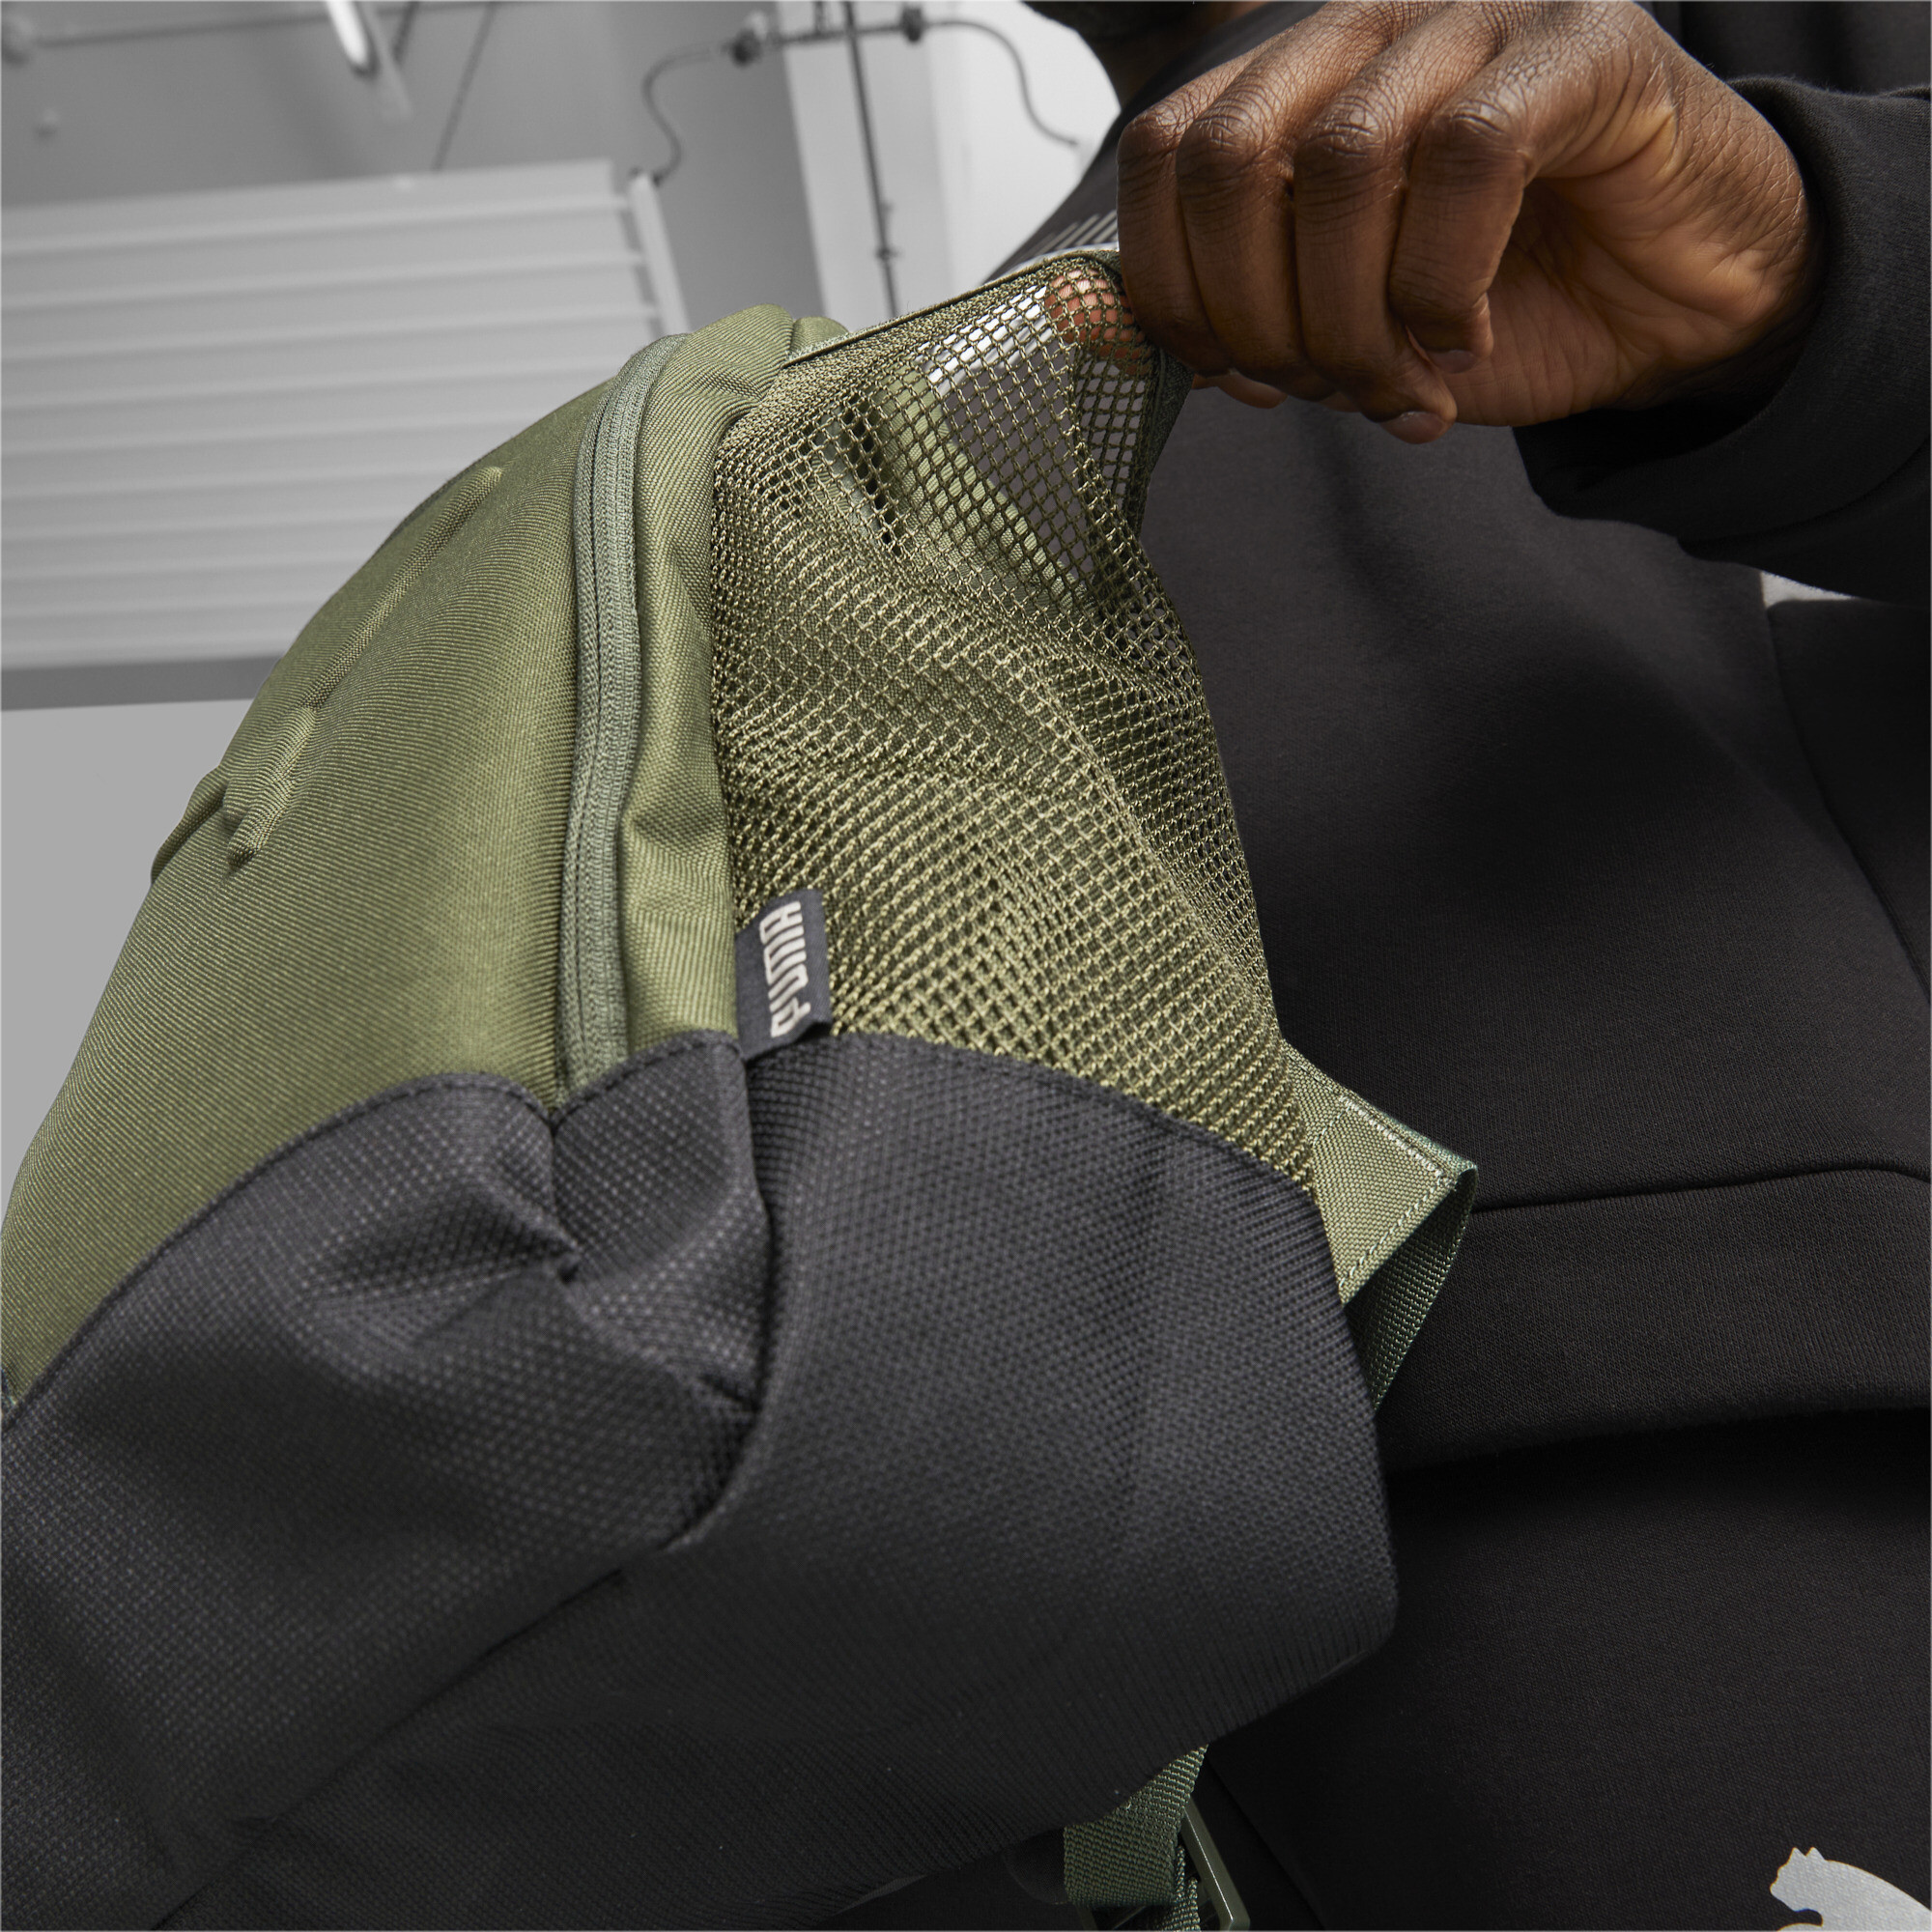 Puma Buzz Backpack, Green, Accessories